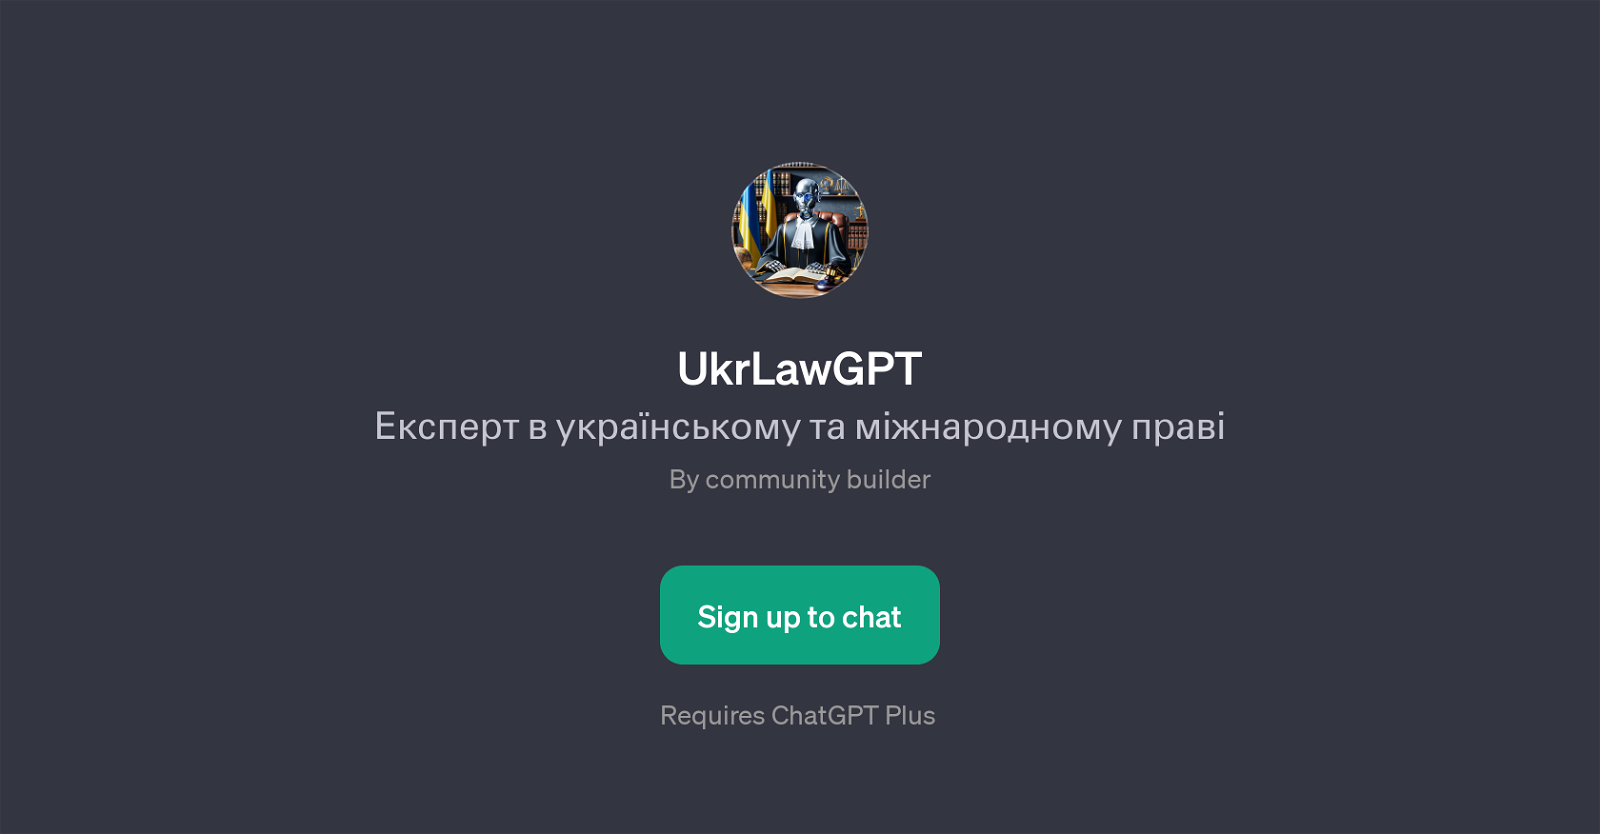 UkrLawGPT website